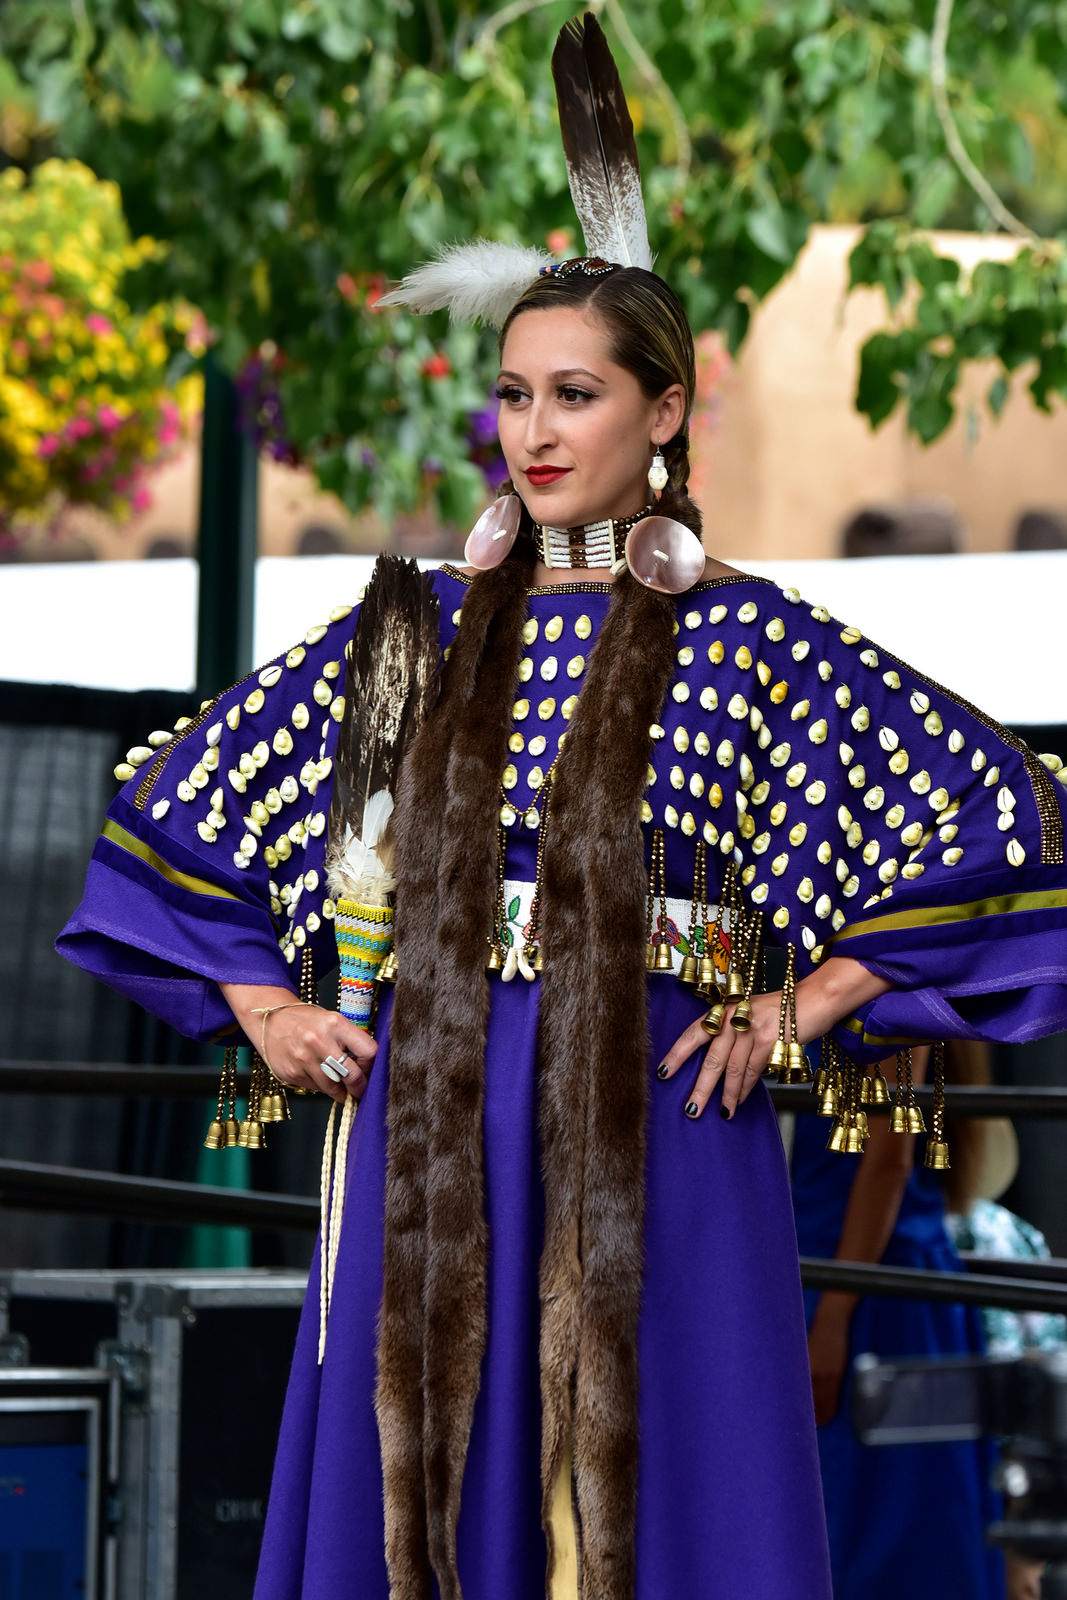 Contemporary Native Fashion - Woondu